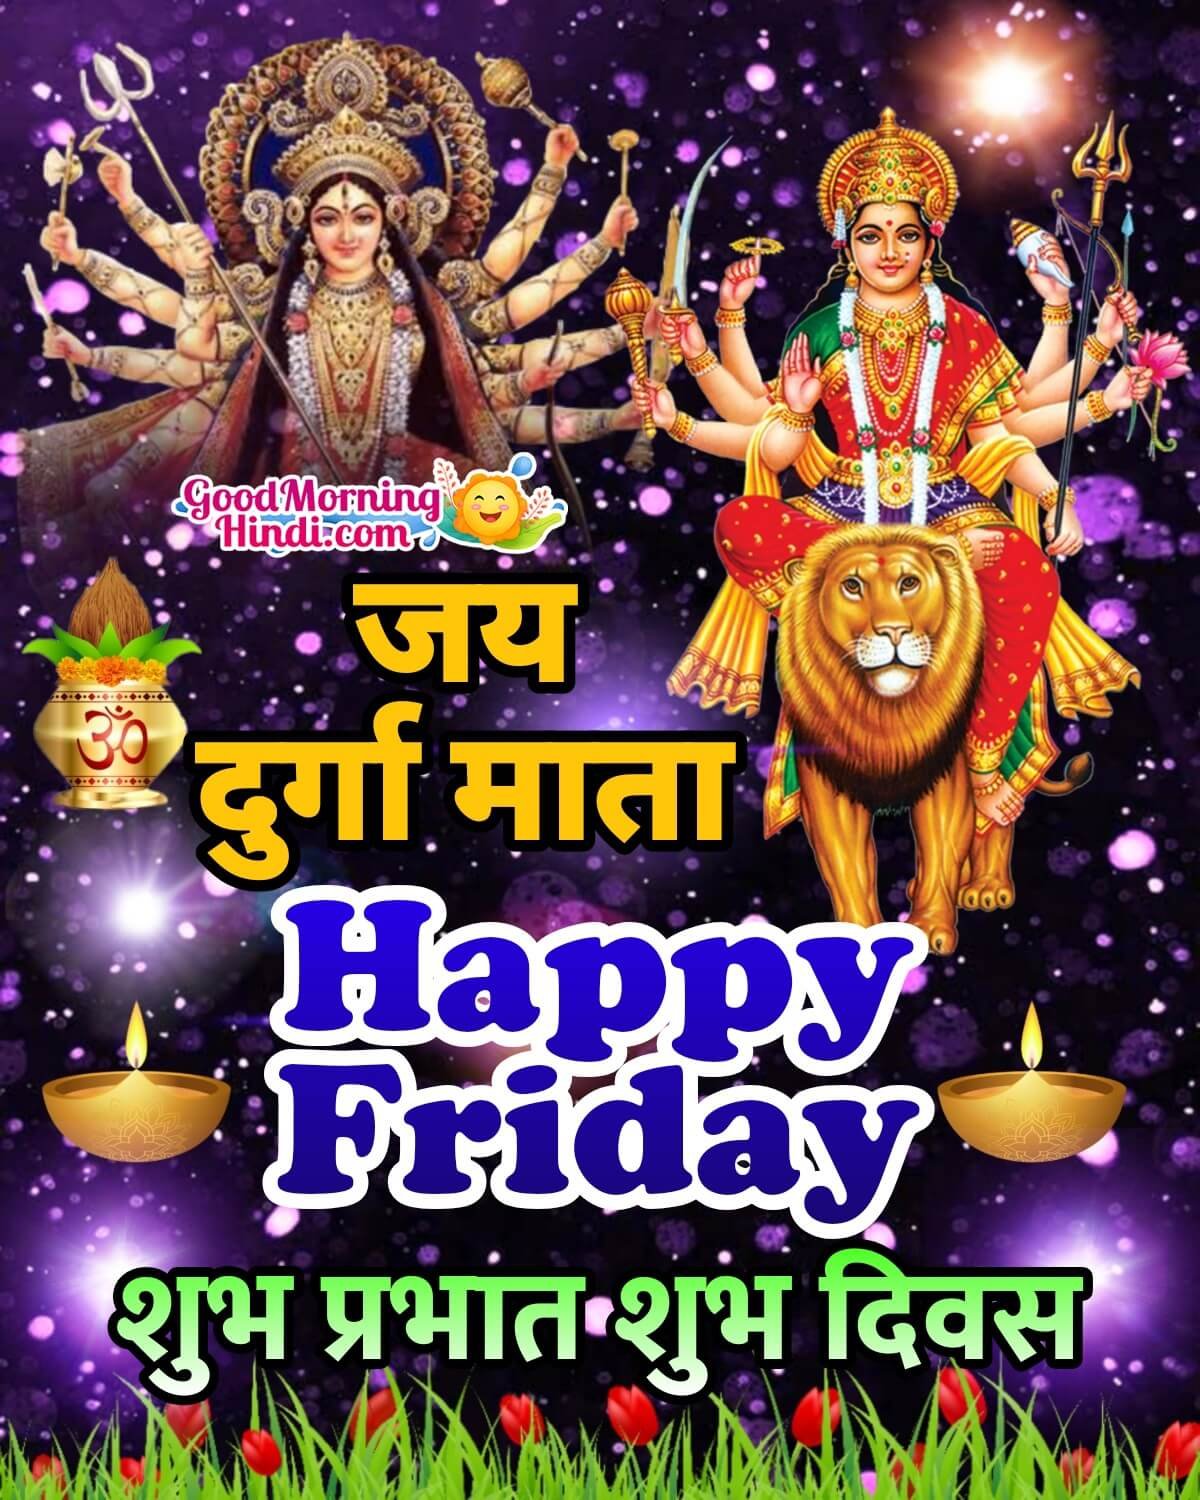 Jai Maa Durga  Good Morning Images For Friday